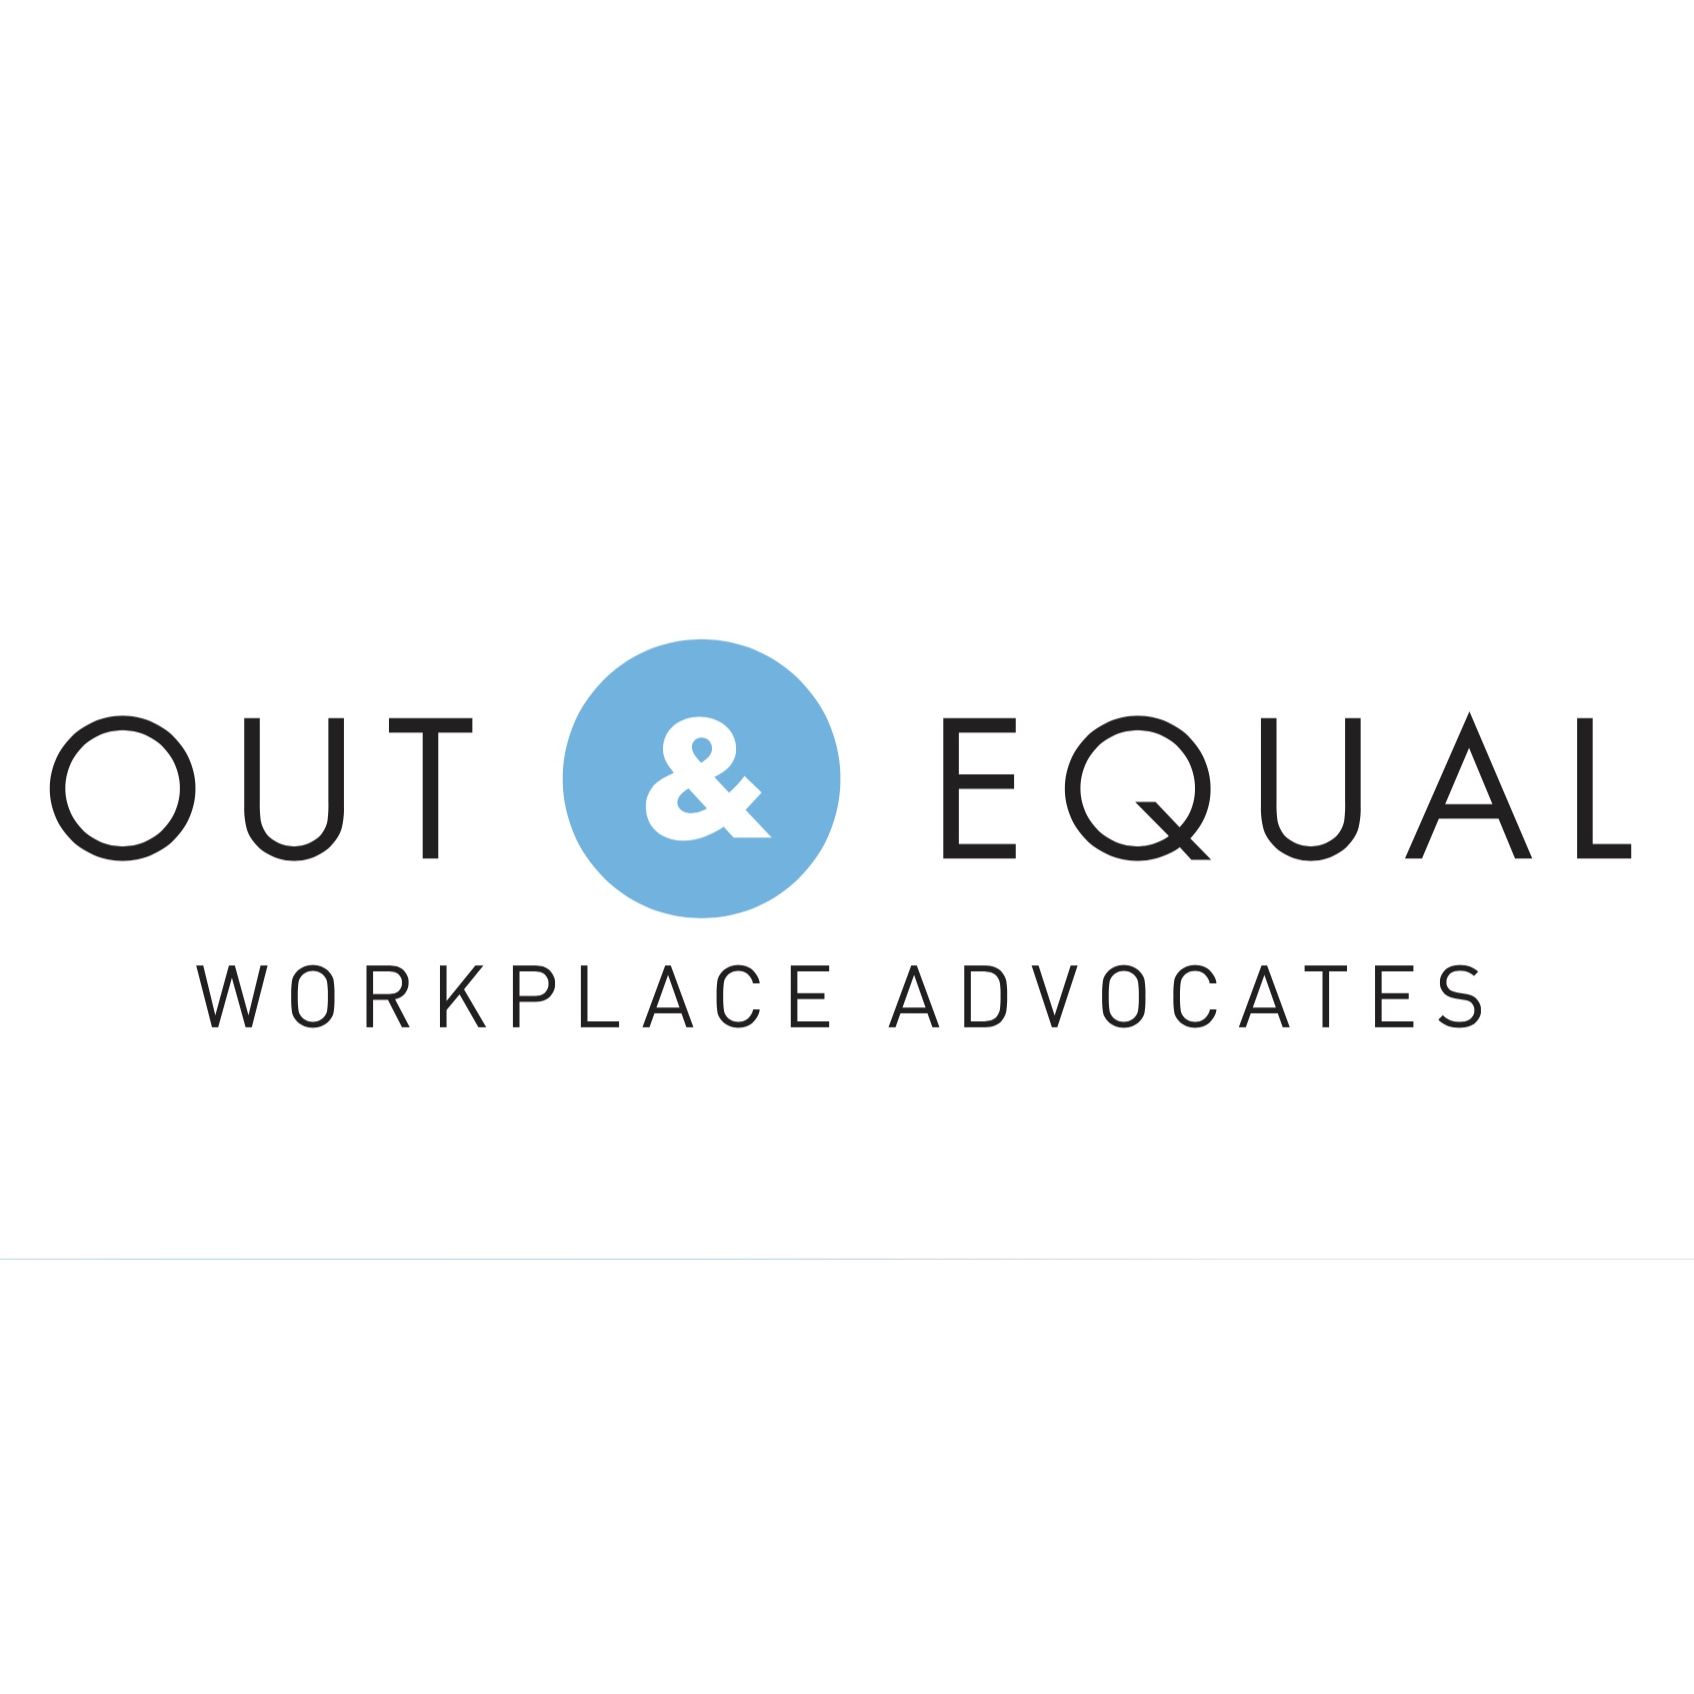 LGBTQ Organization in San Jose California - Out & Equal